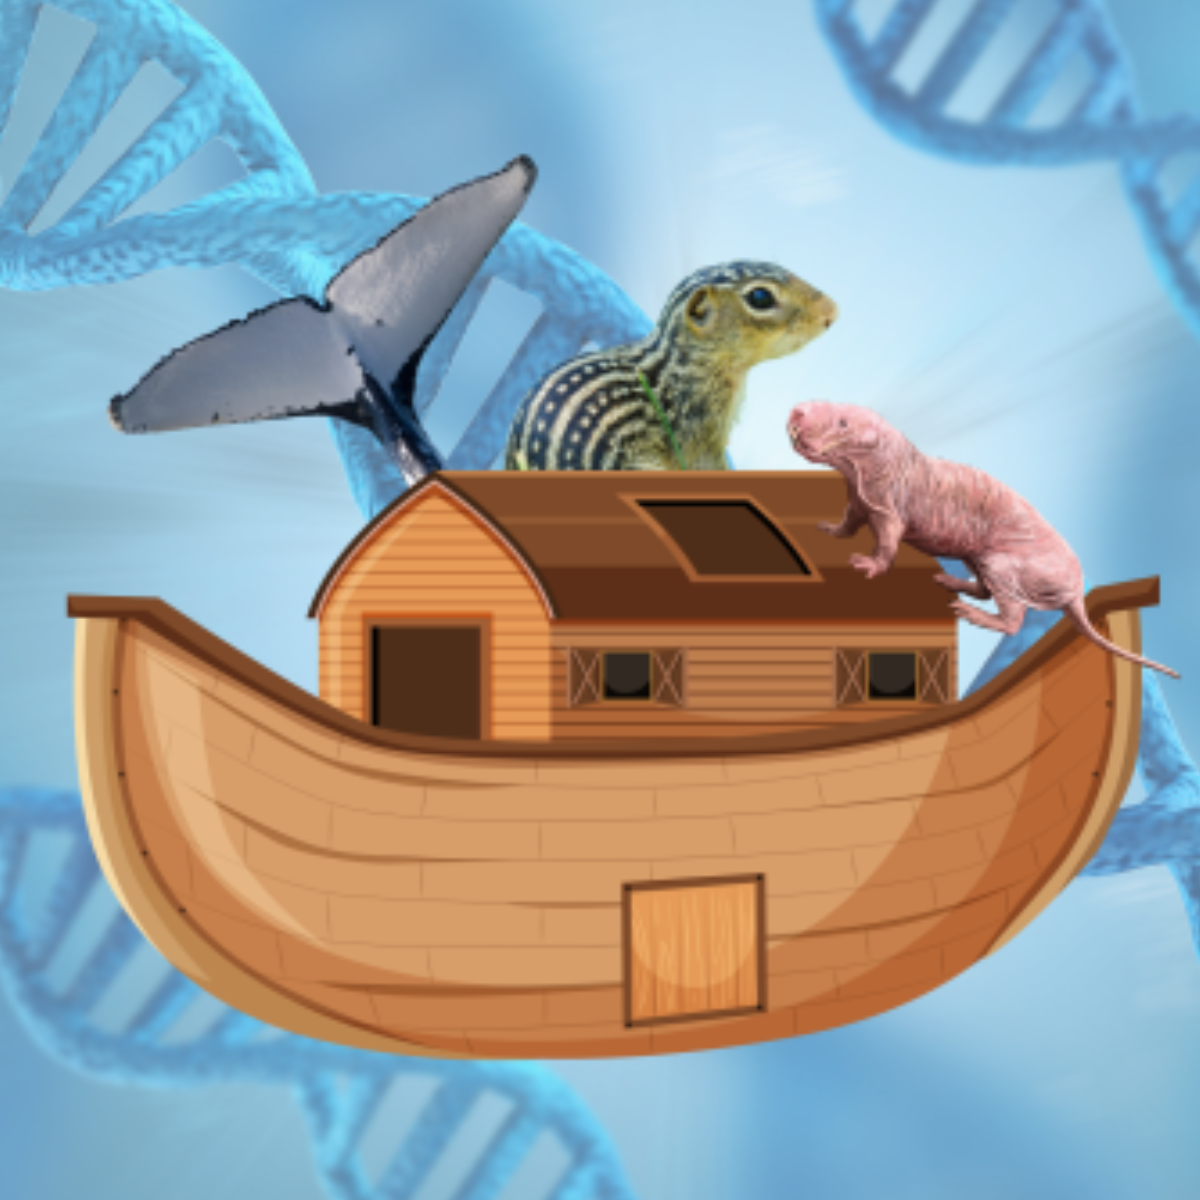 S6.09: Raiders of Noah’s Ark: Stealing genetic tricks from the animal kingdom